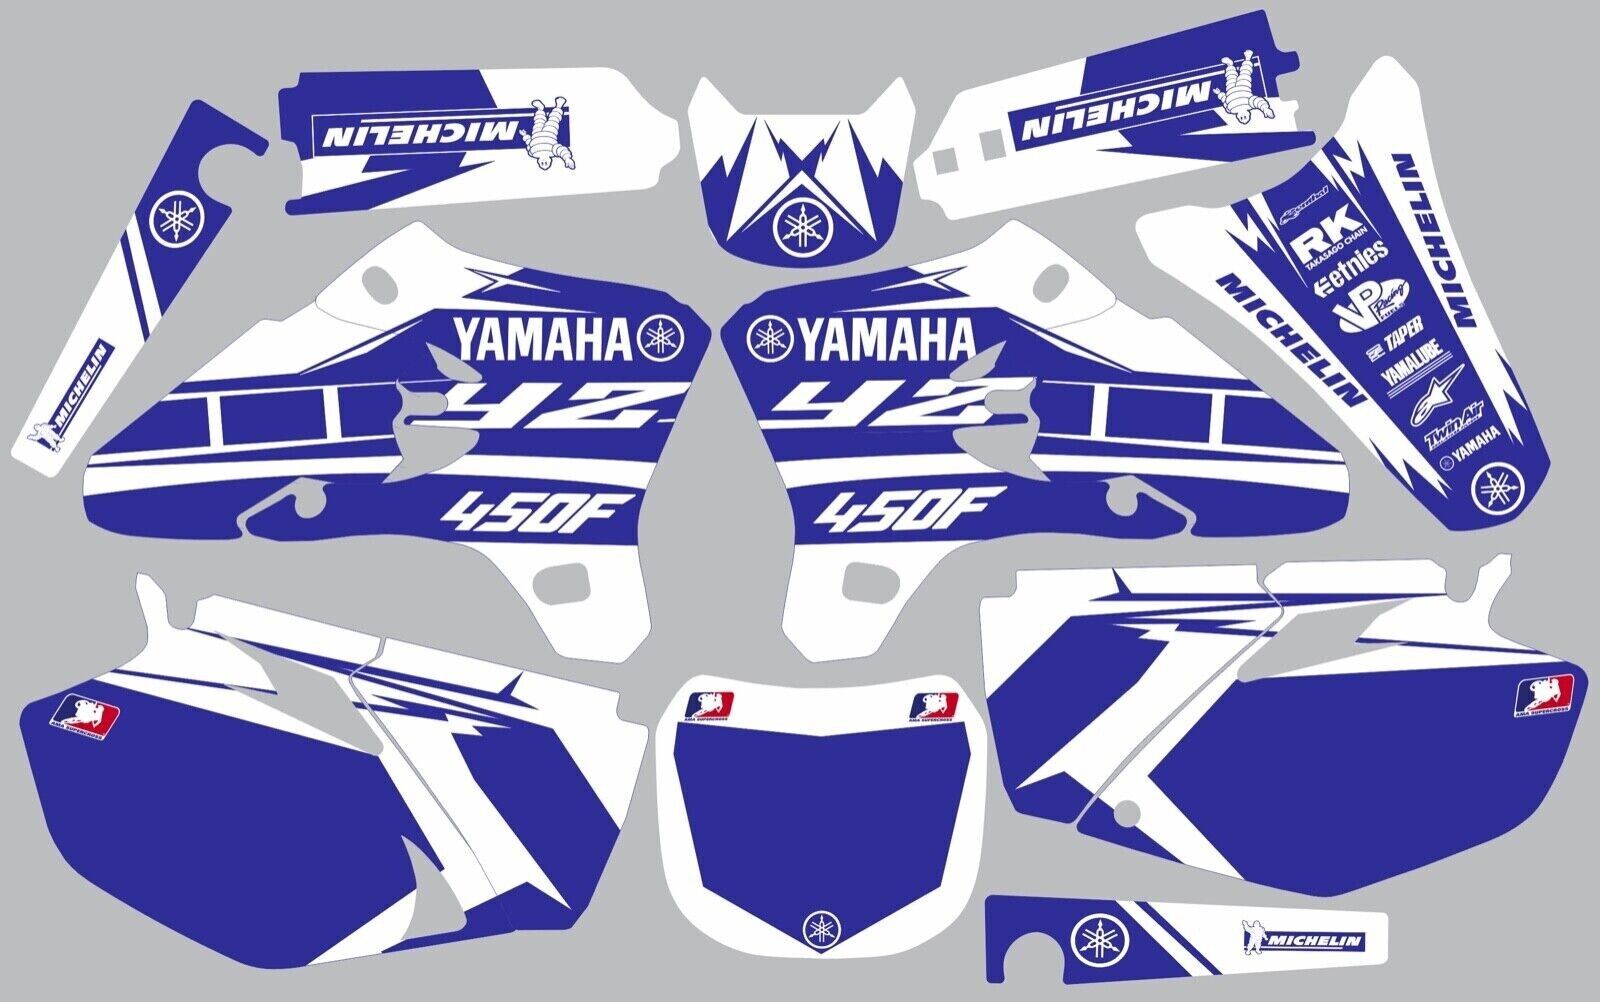 Yamaha NOS 2003-2005 Graphics Kit